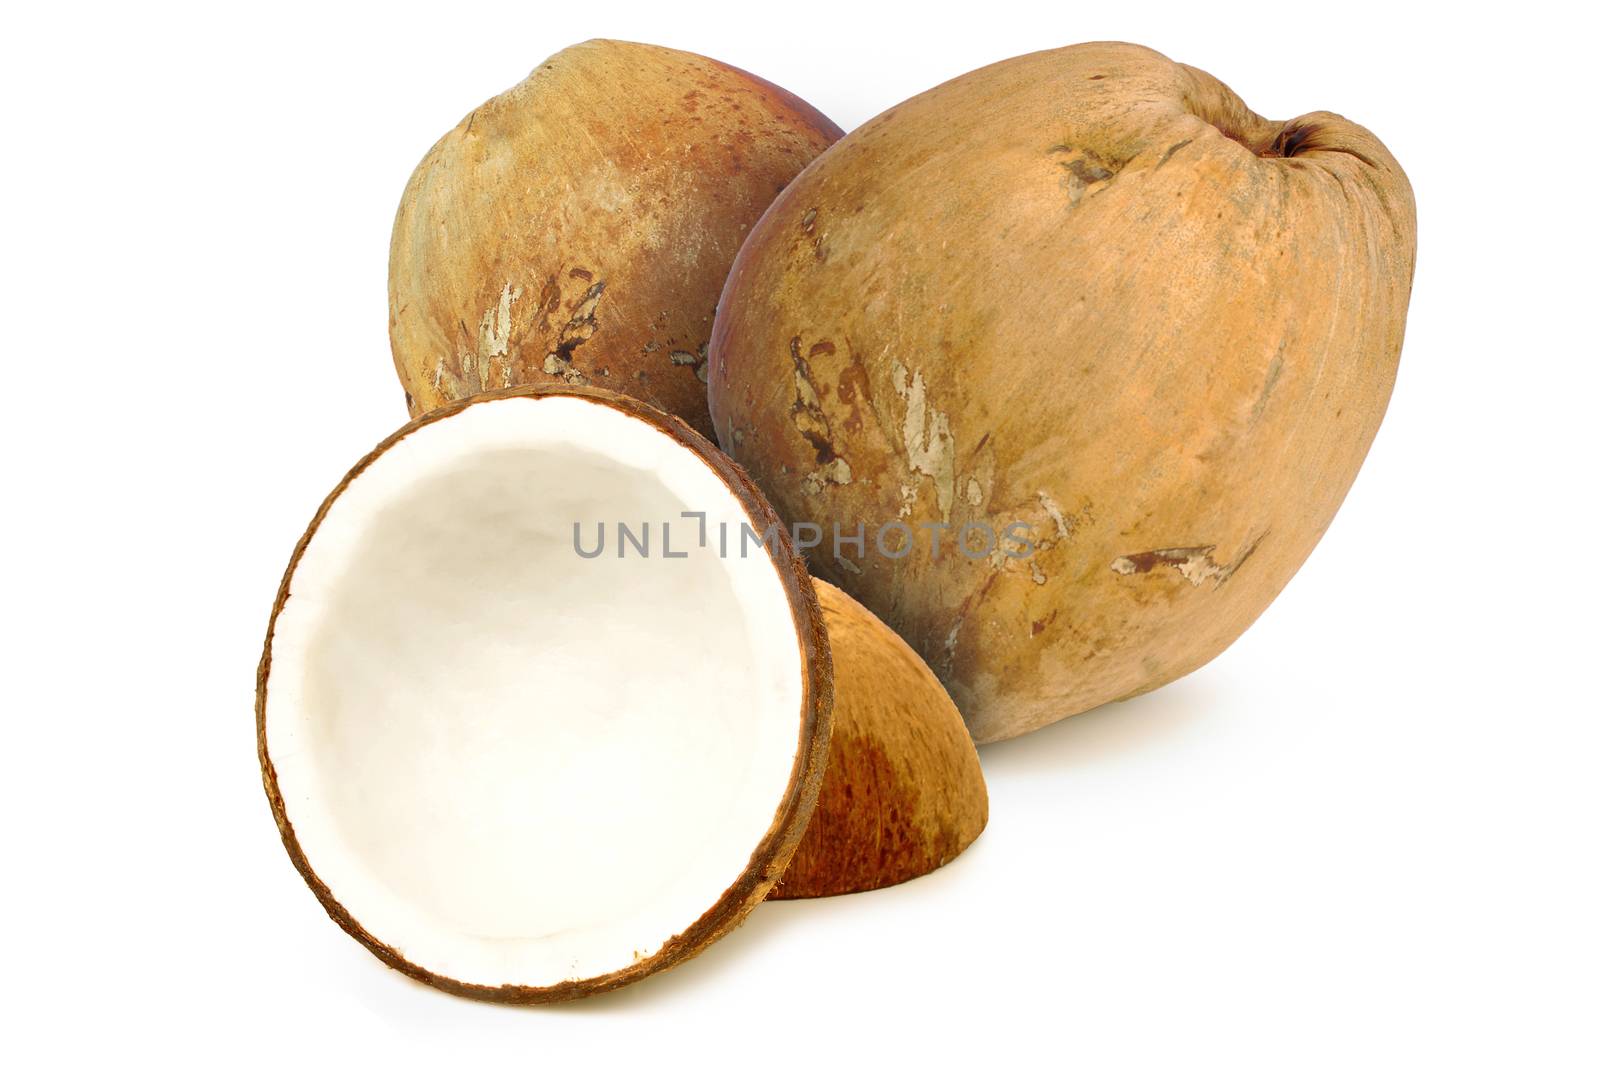 Dried coconut balls. by thitimontoyai